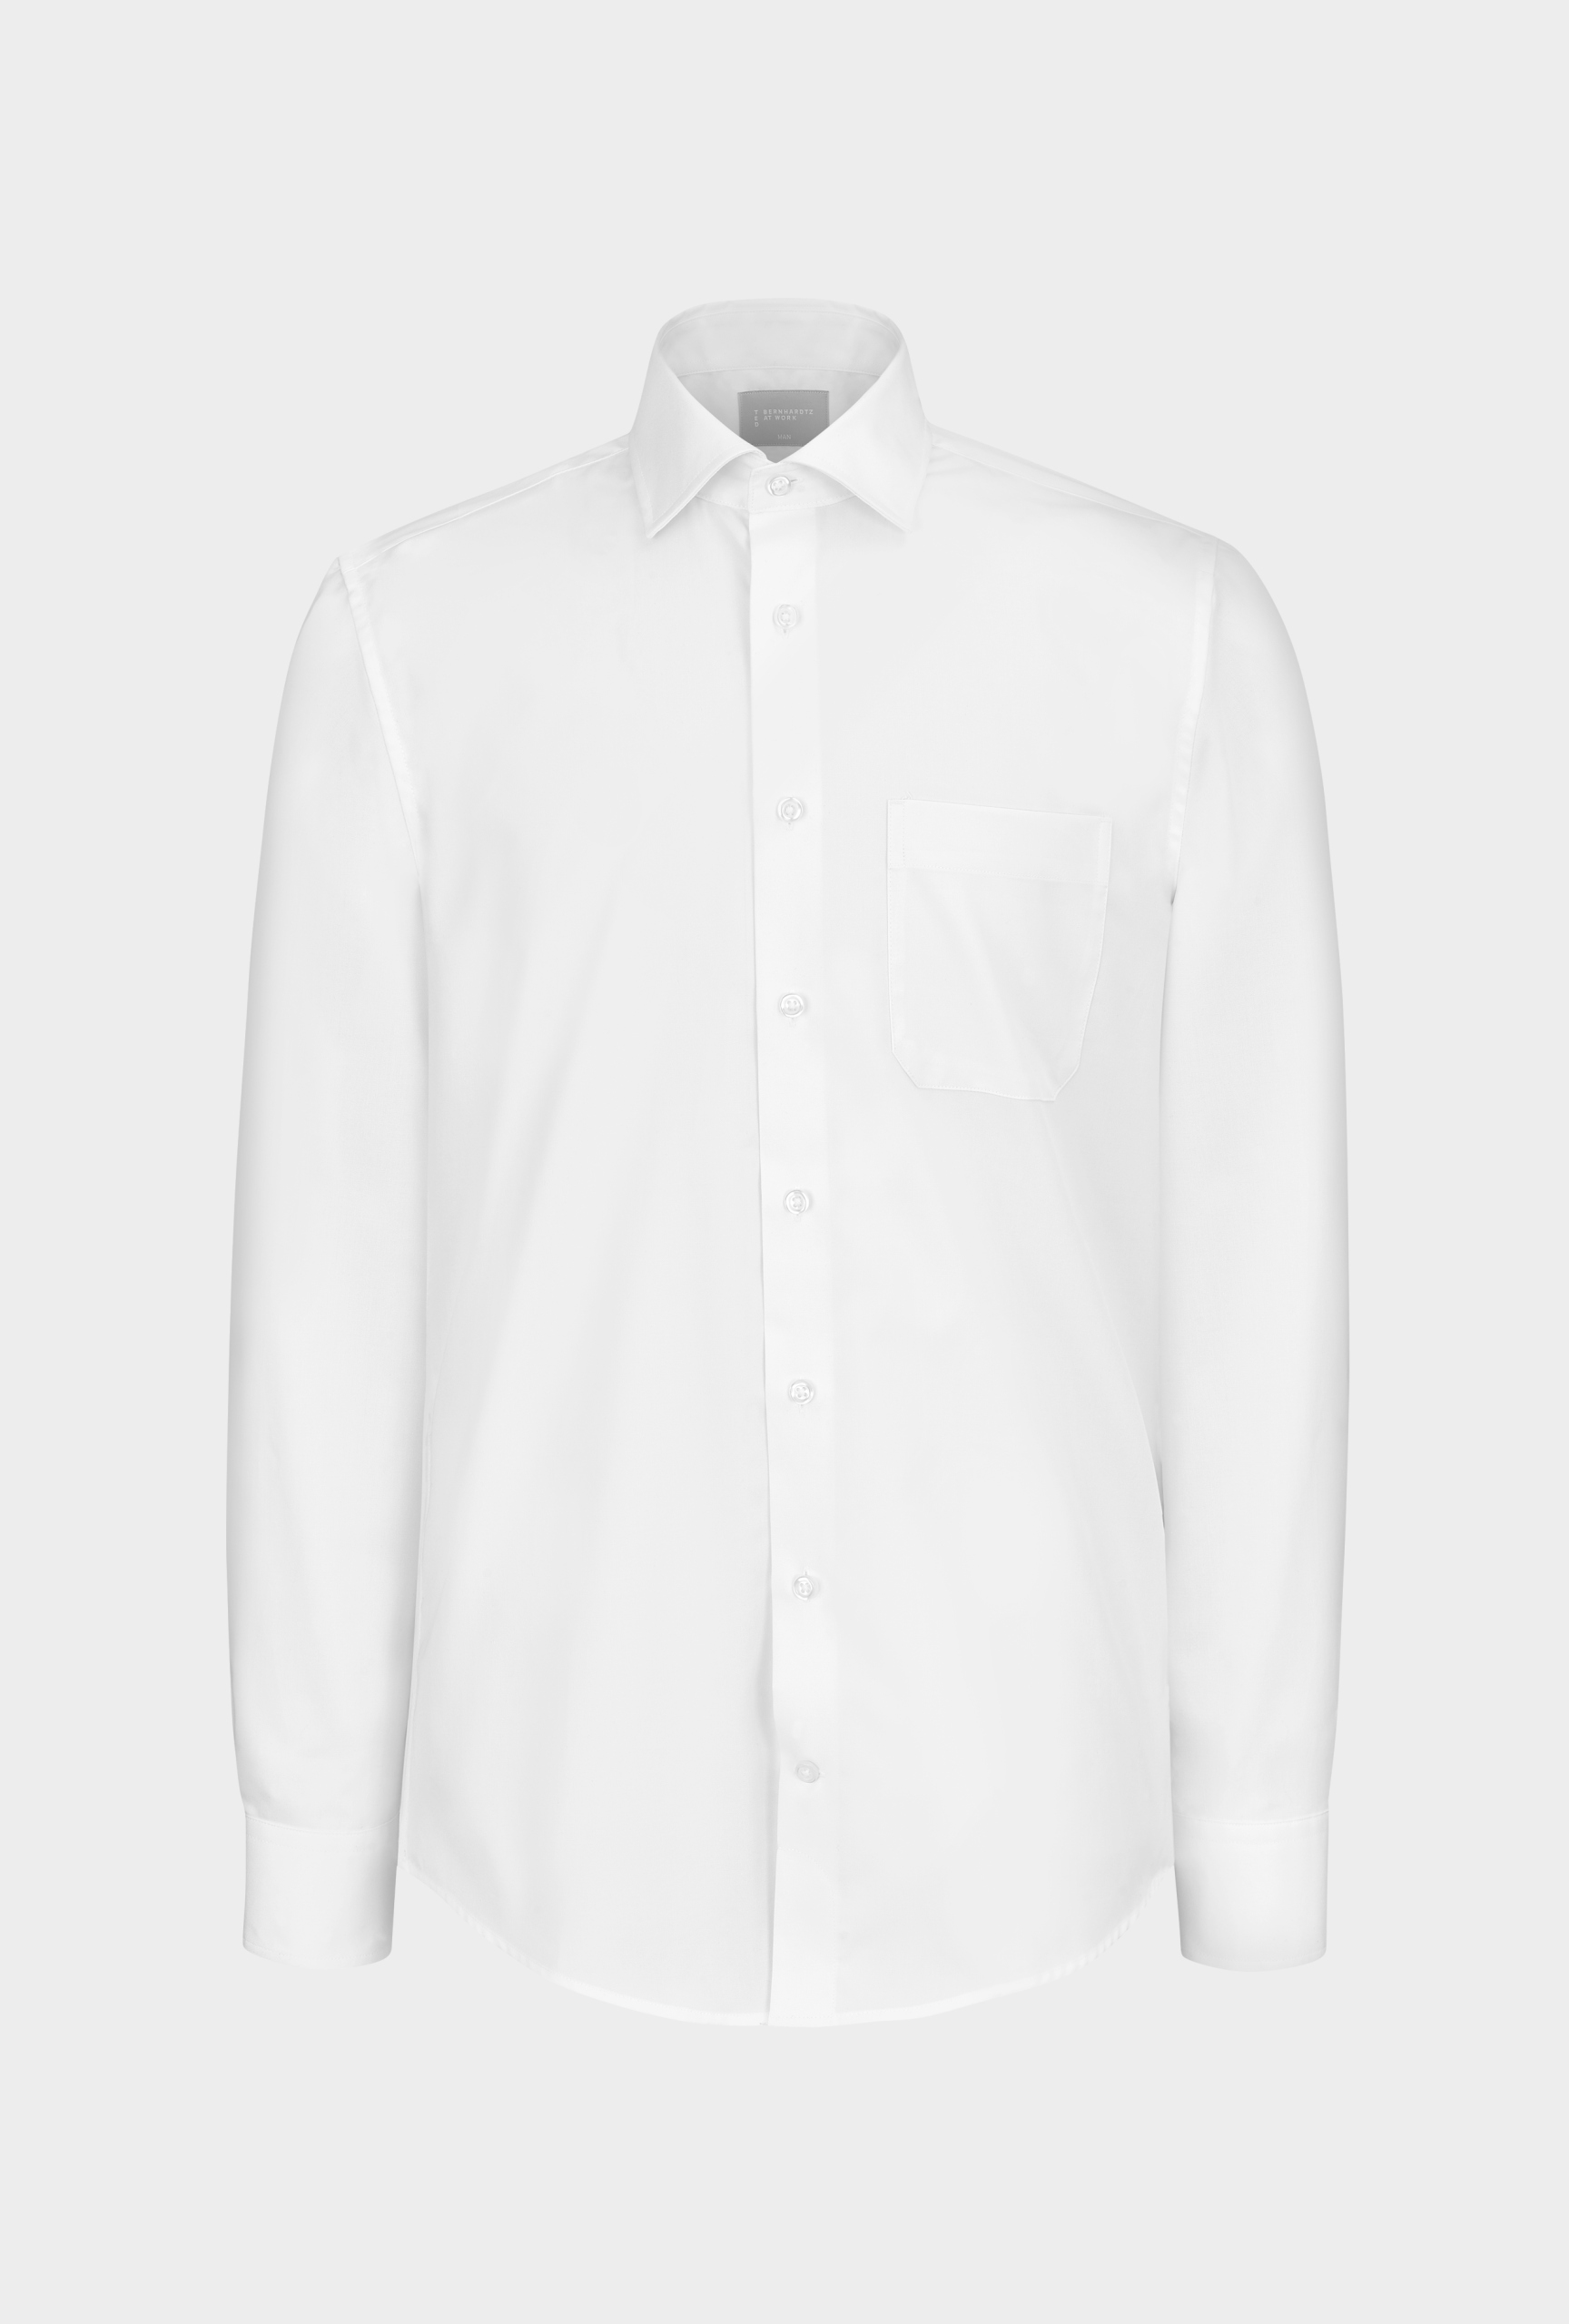 Men’s shirt Jens, long sleeve | Ted Bernhardtz – At Work collection shop